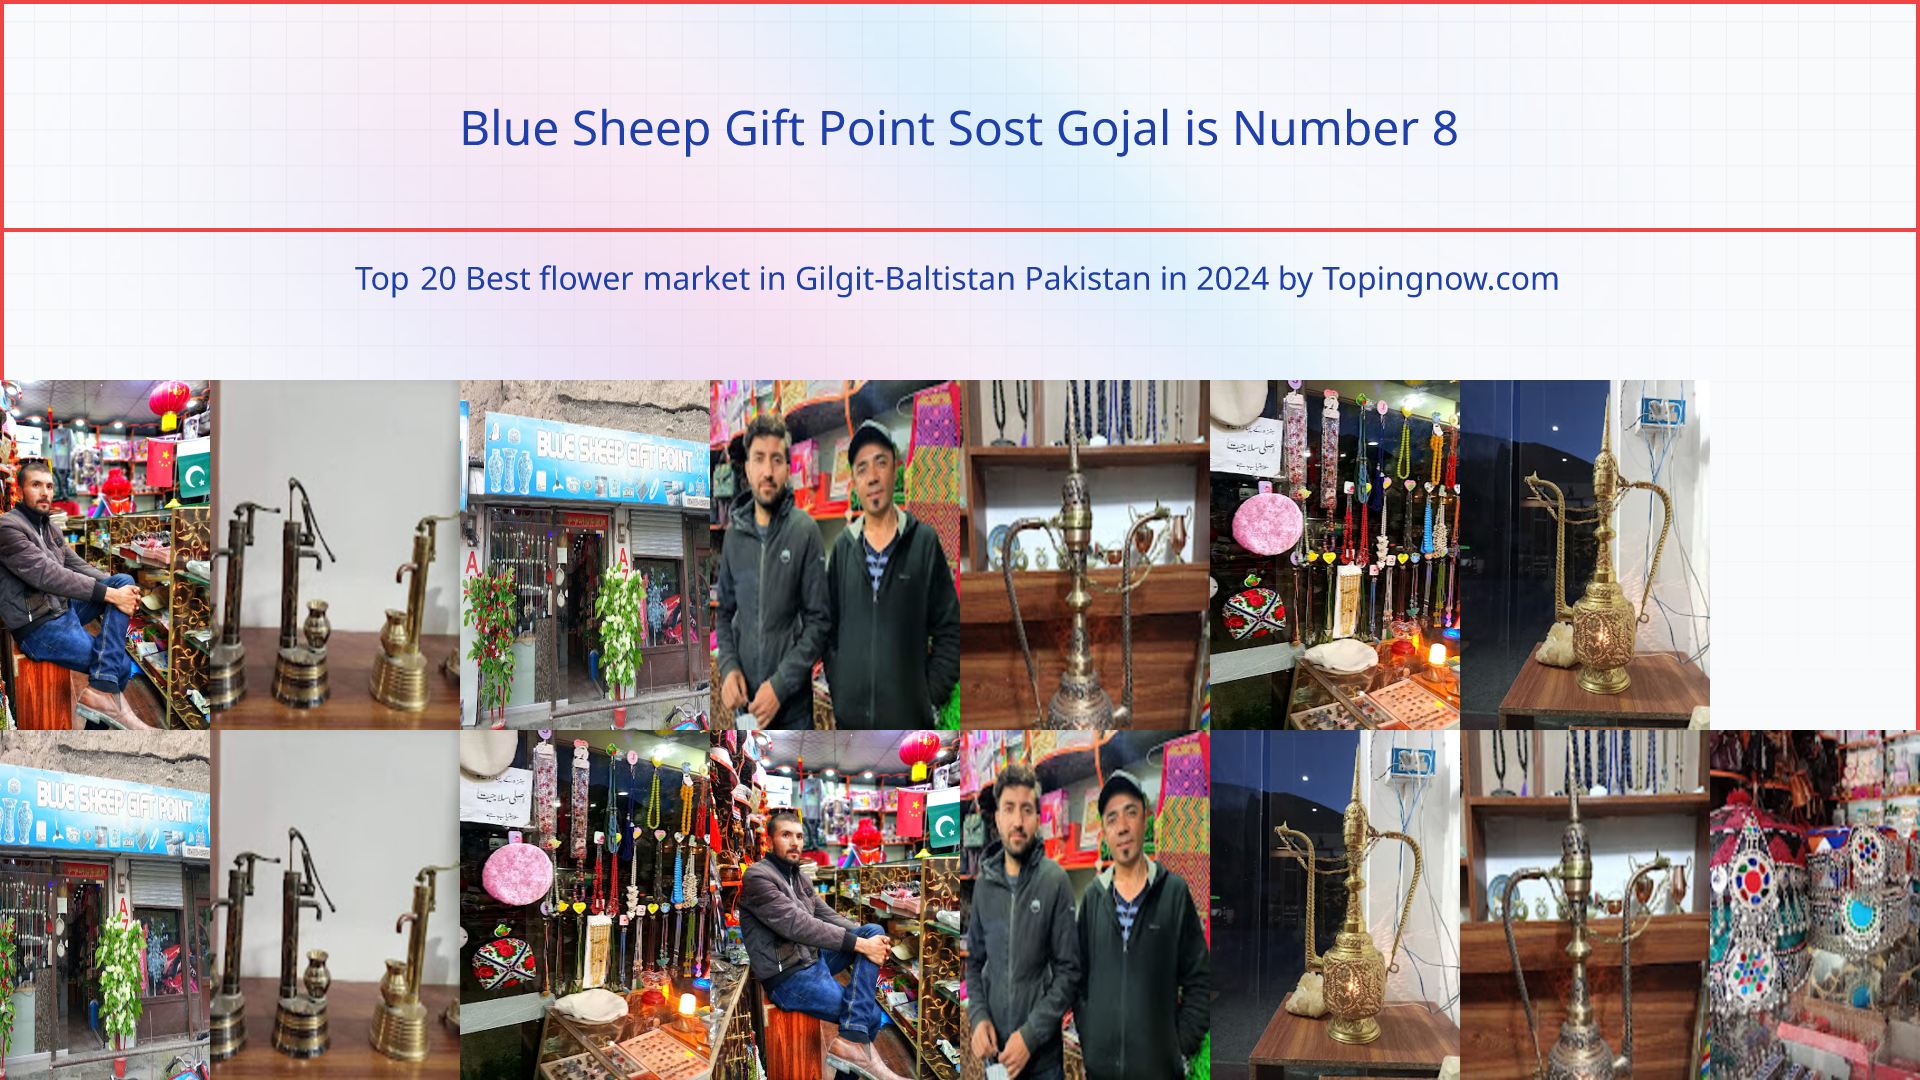 Blue Sheep Gift Point Sost Gojal: Top 20 Best flower market in Gilgit-Baltistan Pakistan in 2024